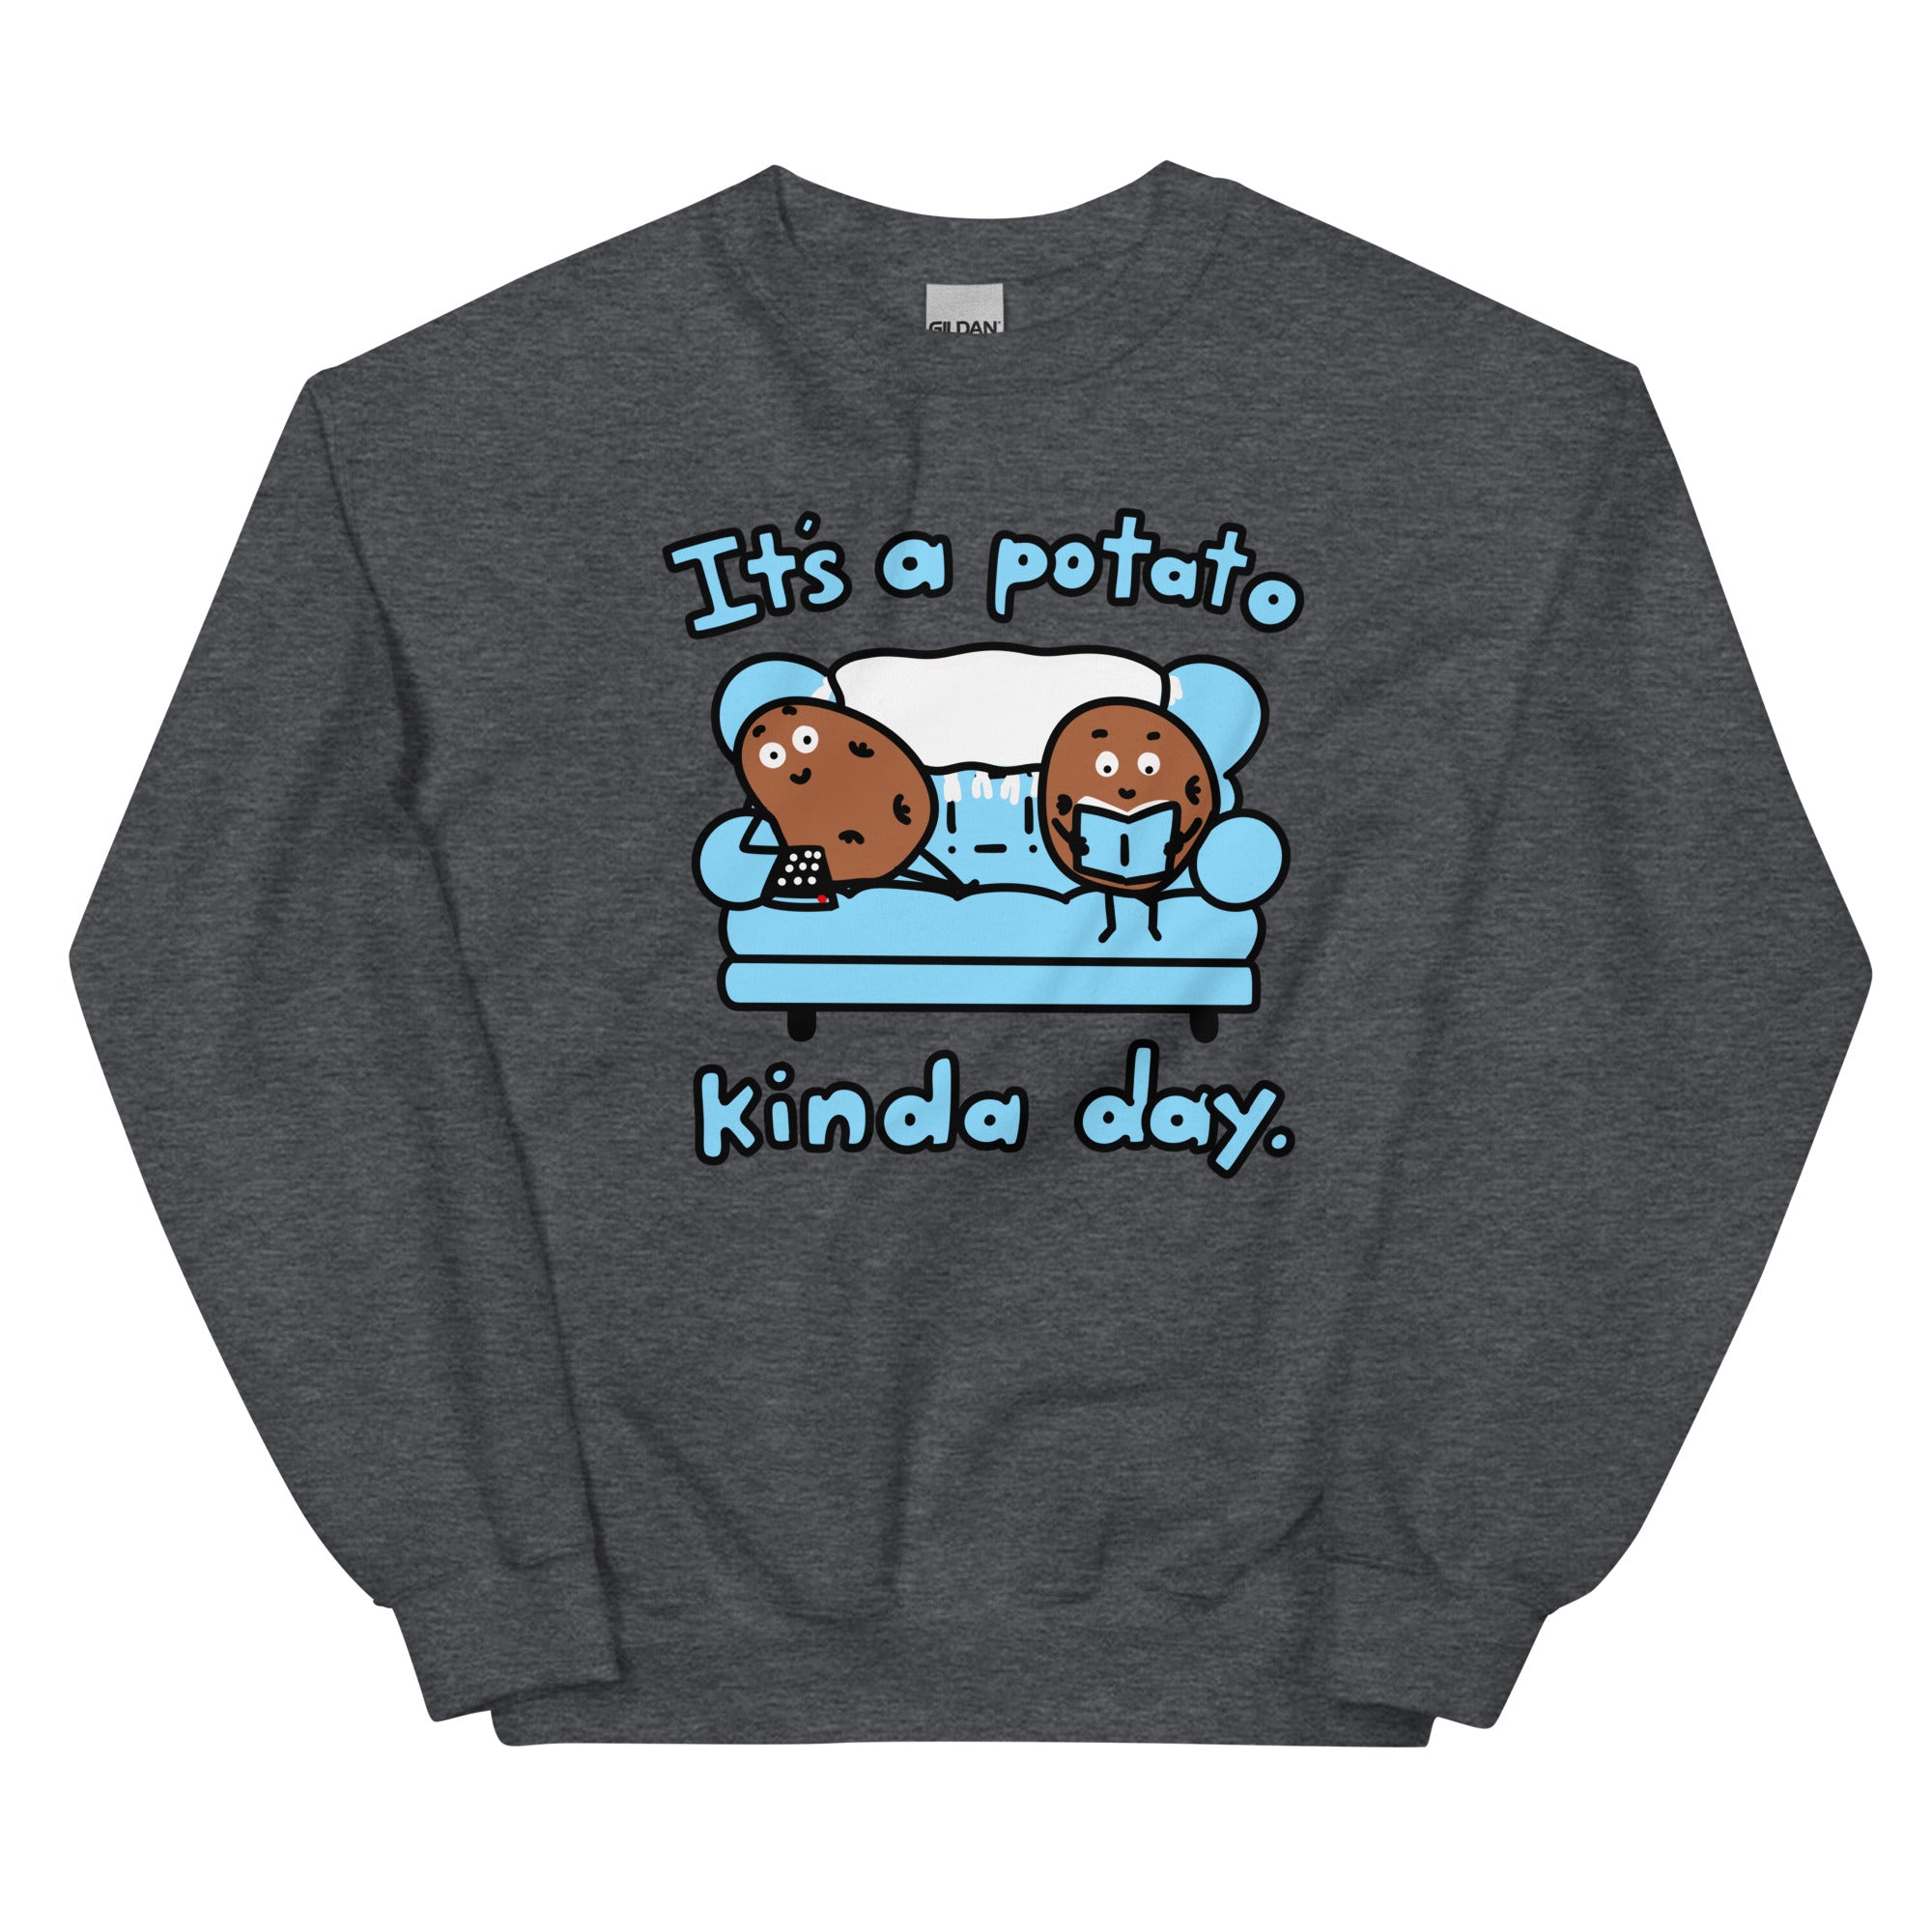 Couch potato sweatshirt, Relax and be a potato shirt, bed rot shirt, Kalirally